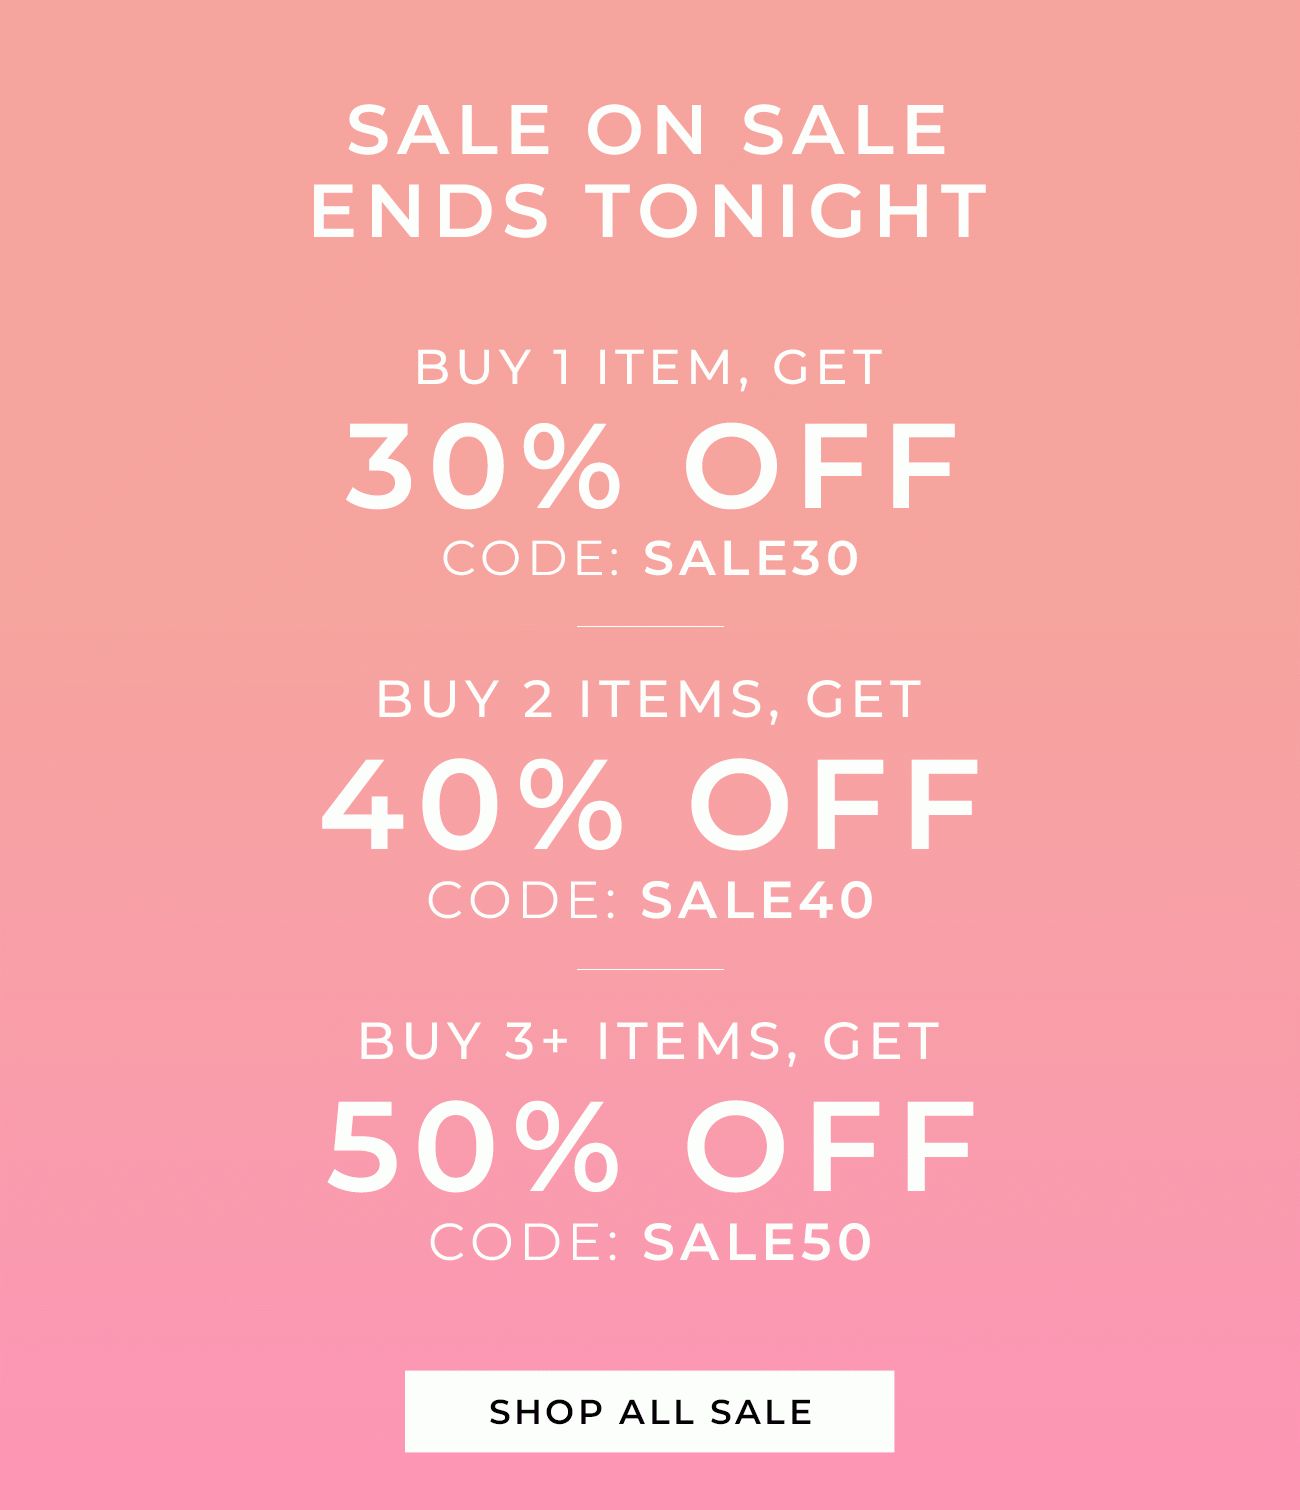 SALE ON SALE ENDS TONIGHT Buy 1 item, Get 30% Off code: SALE30 Buy 2 items, Get 40% Off code: SALE40 Buy 3+ items, Get 50% Off code: SALE50